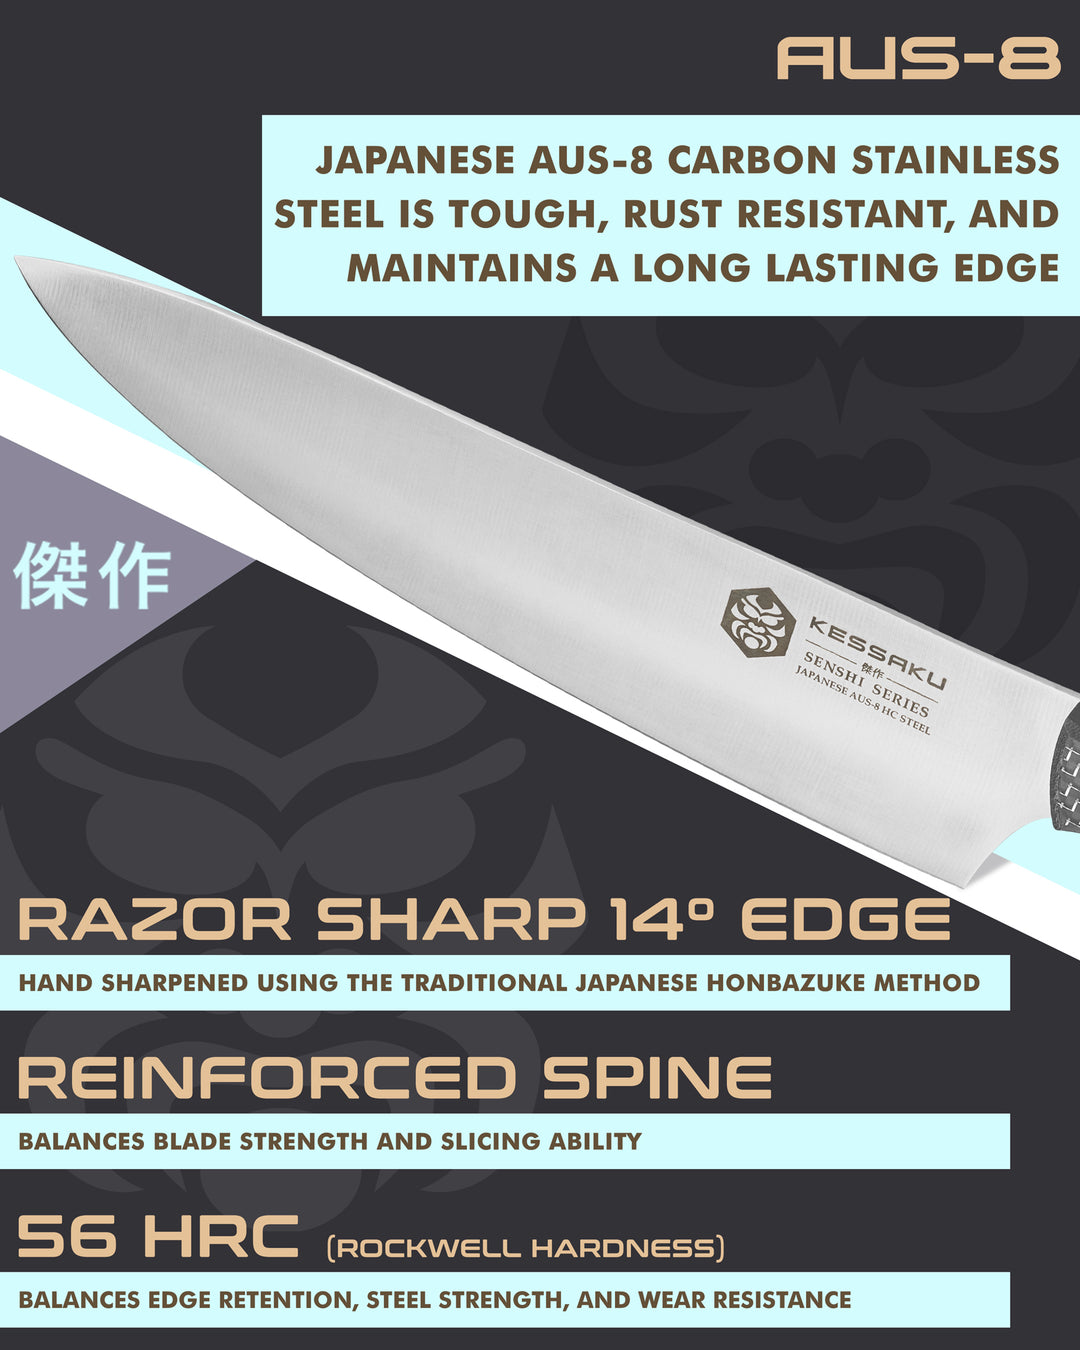 Kessaku Senshi Chef's Knife blade features: AUS-8 steel, 56 HRC, 14 degree edge, reinforced spine